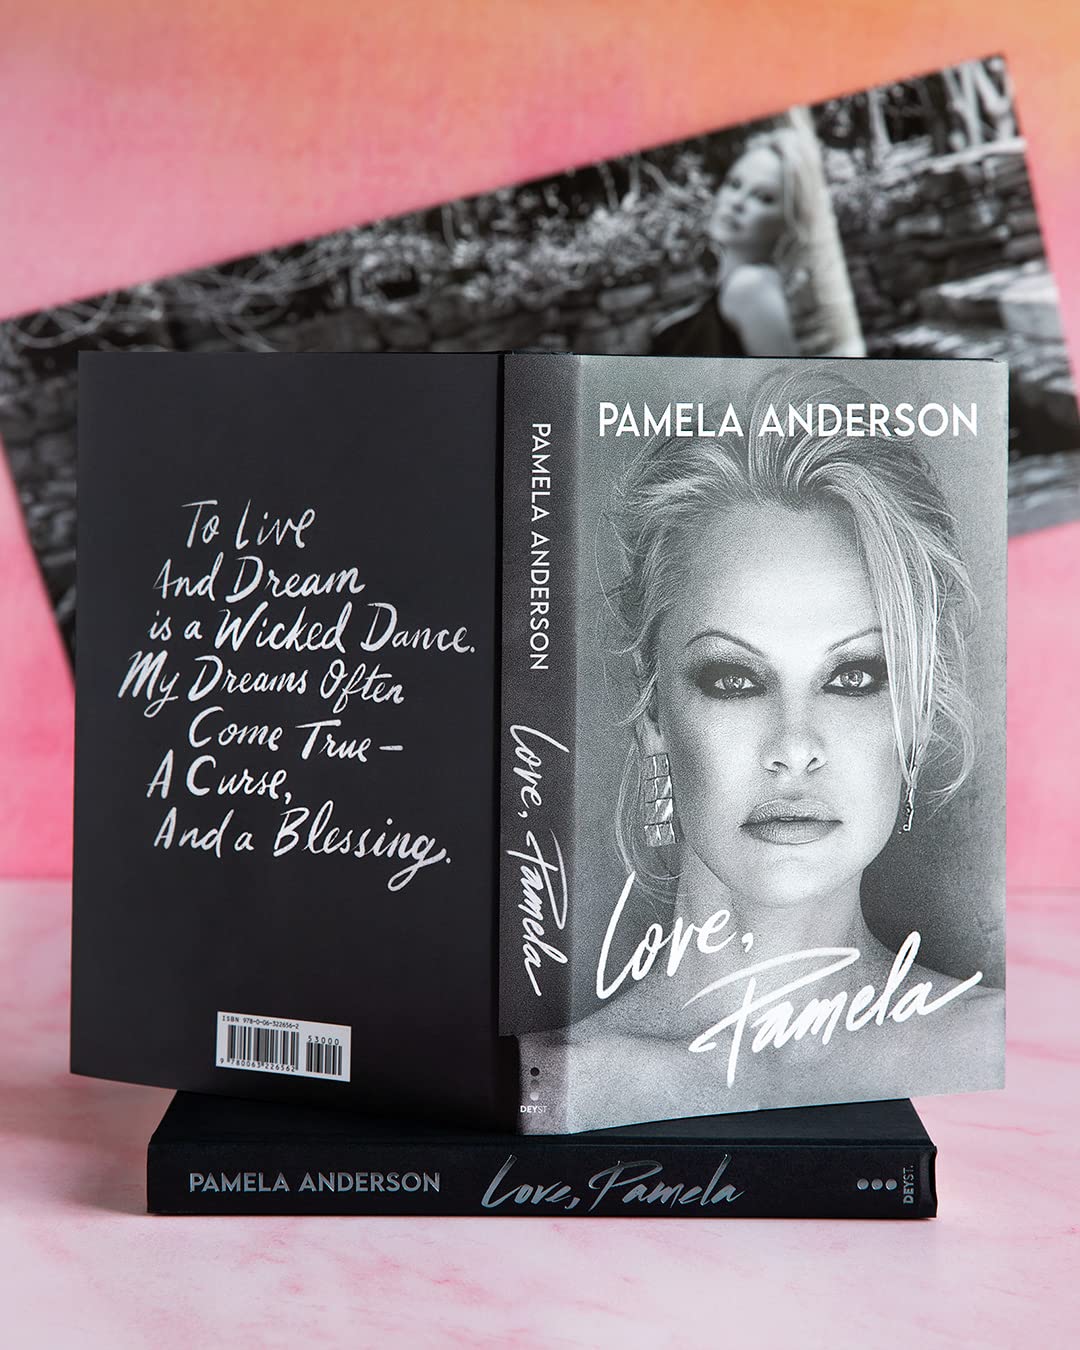 Love, Pamela: A Memoir of Prose, Poetry, and Truth